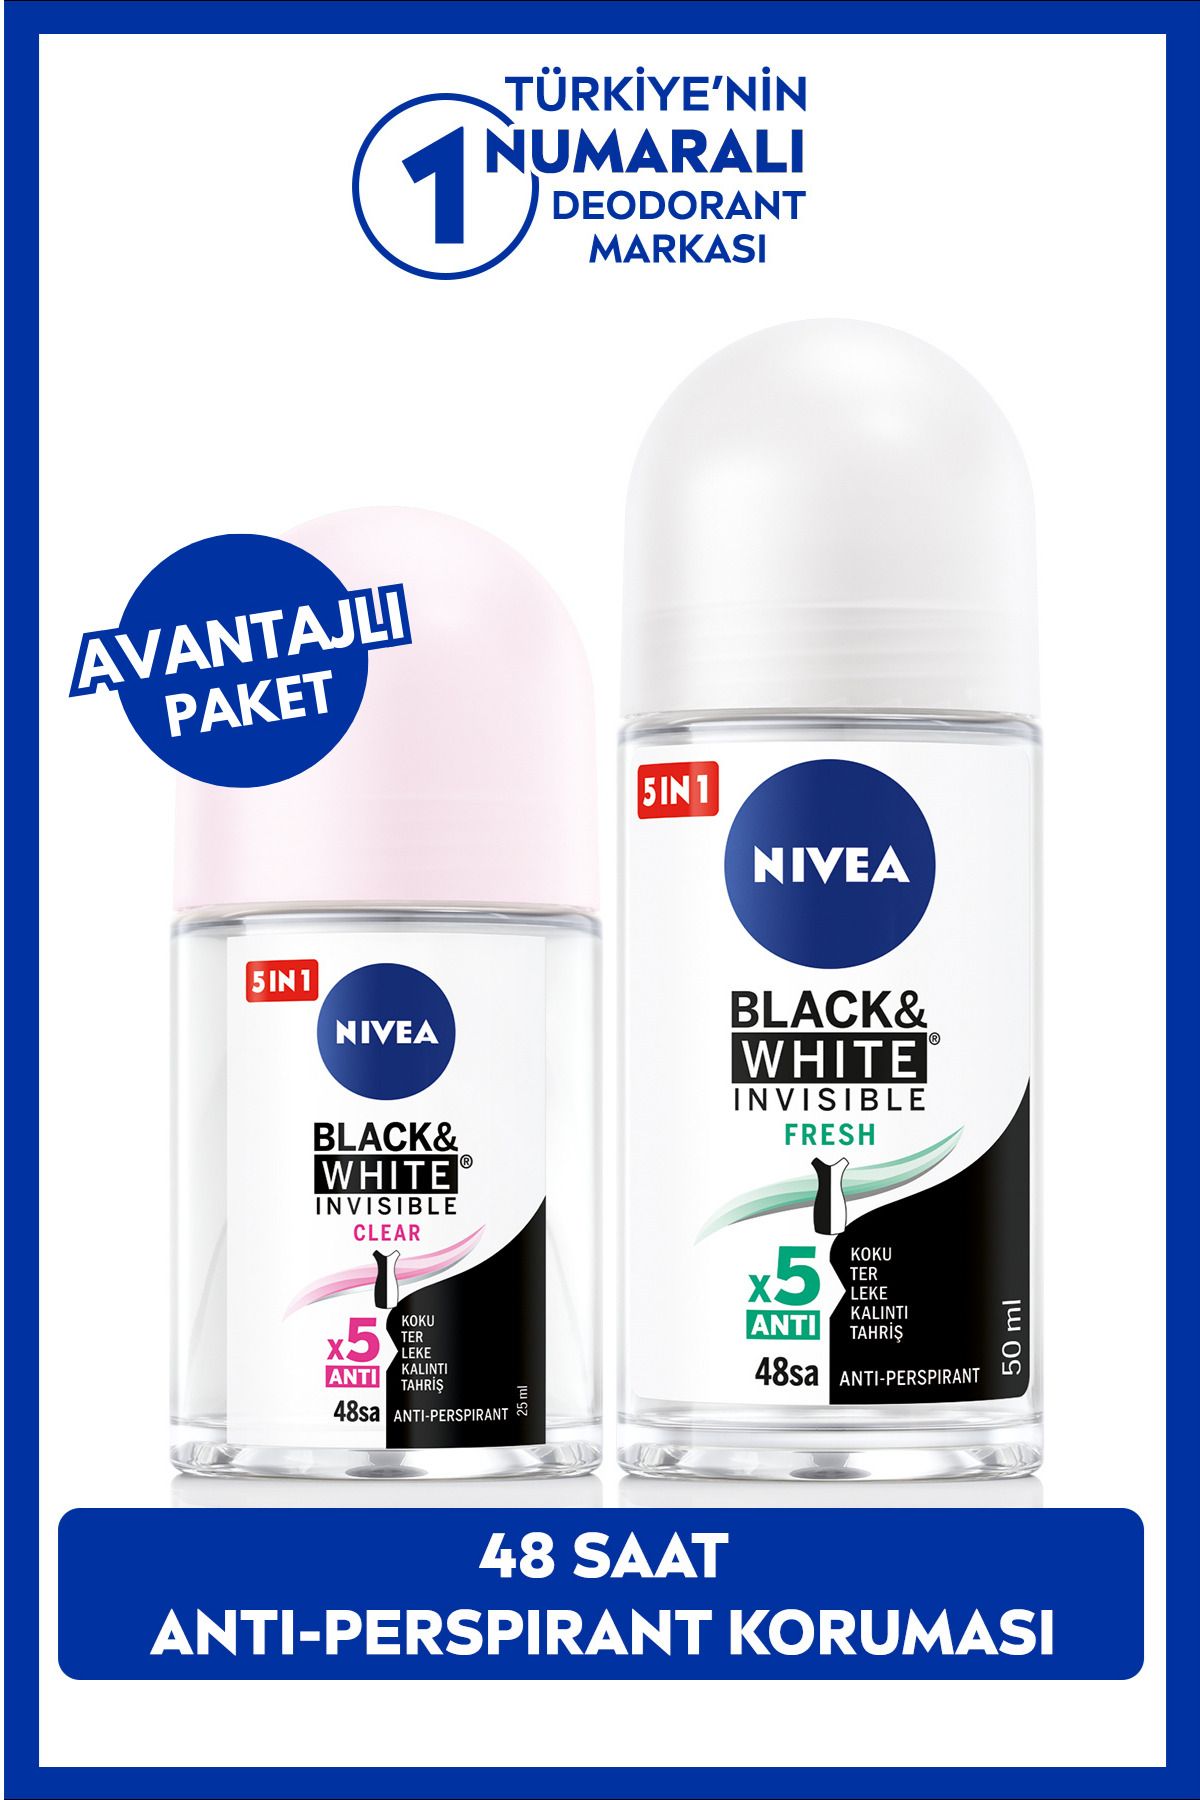 NIVEA Kadın Roll-on Deodorant Black&white Fresh 50ml Ve Mini Roll-on Black&white Clear 25ml